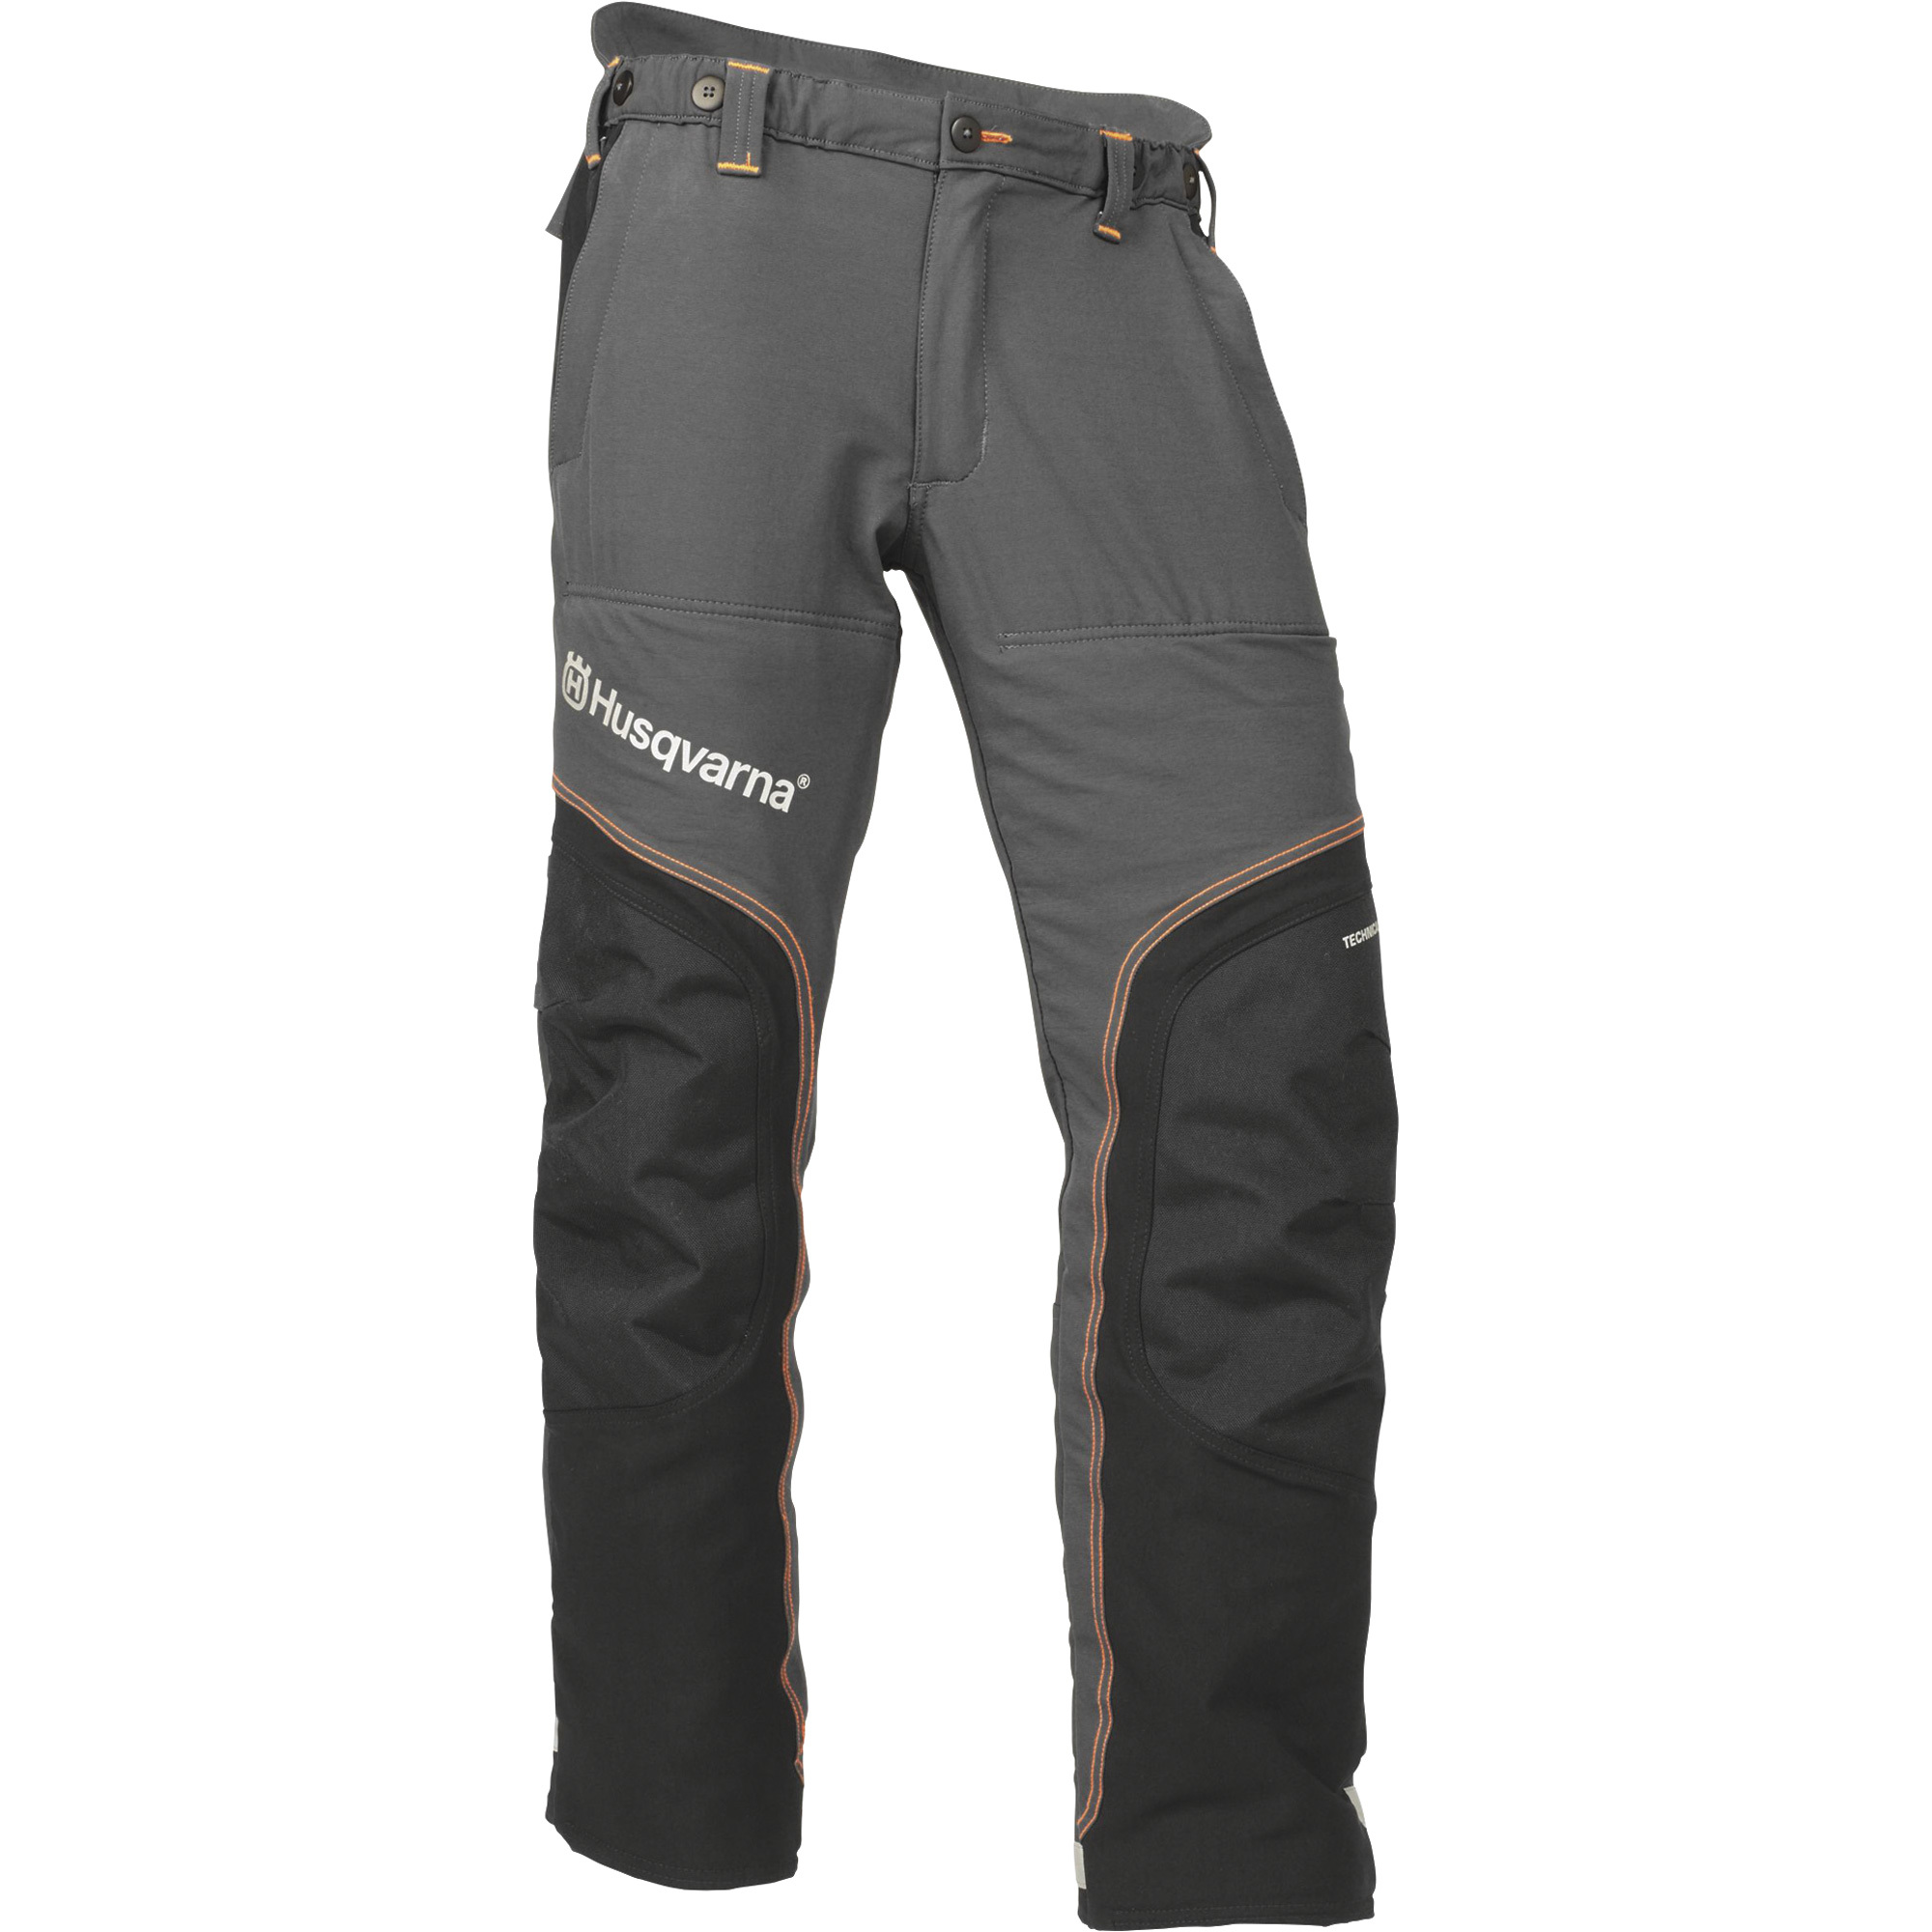 Husqvarna Technical Lo-Viz Protective Pants â Large, Gray